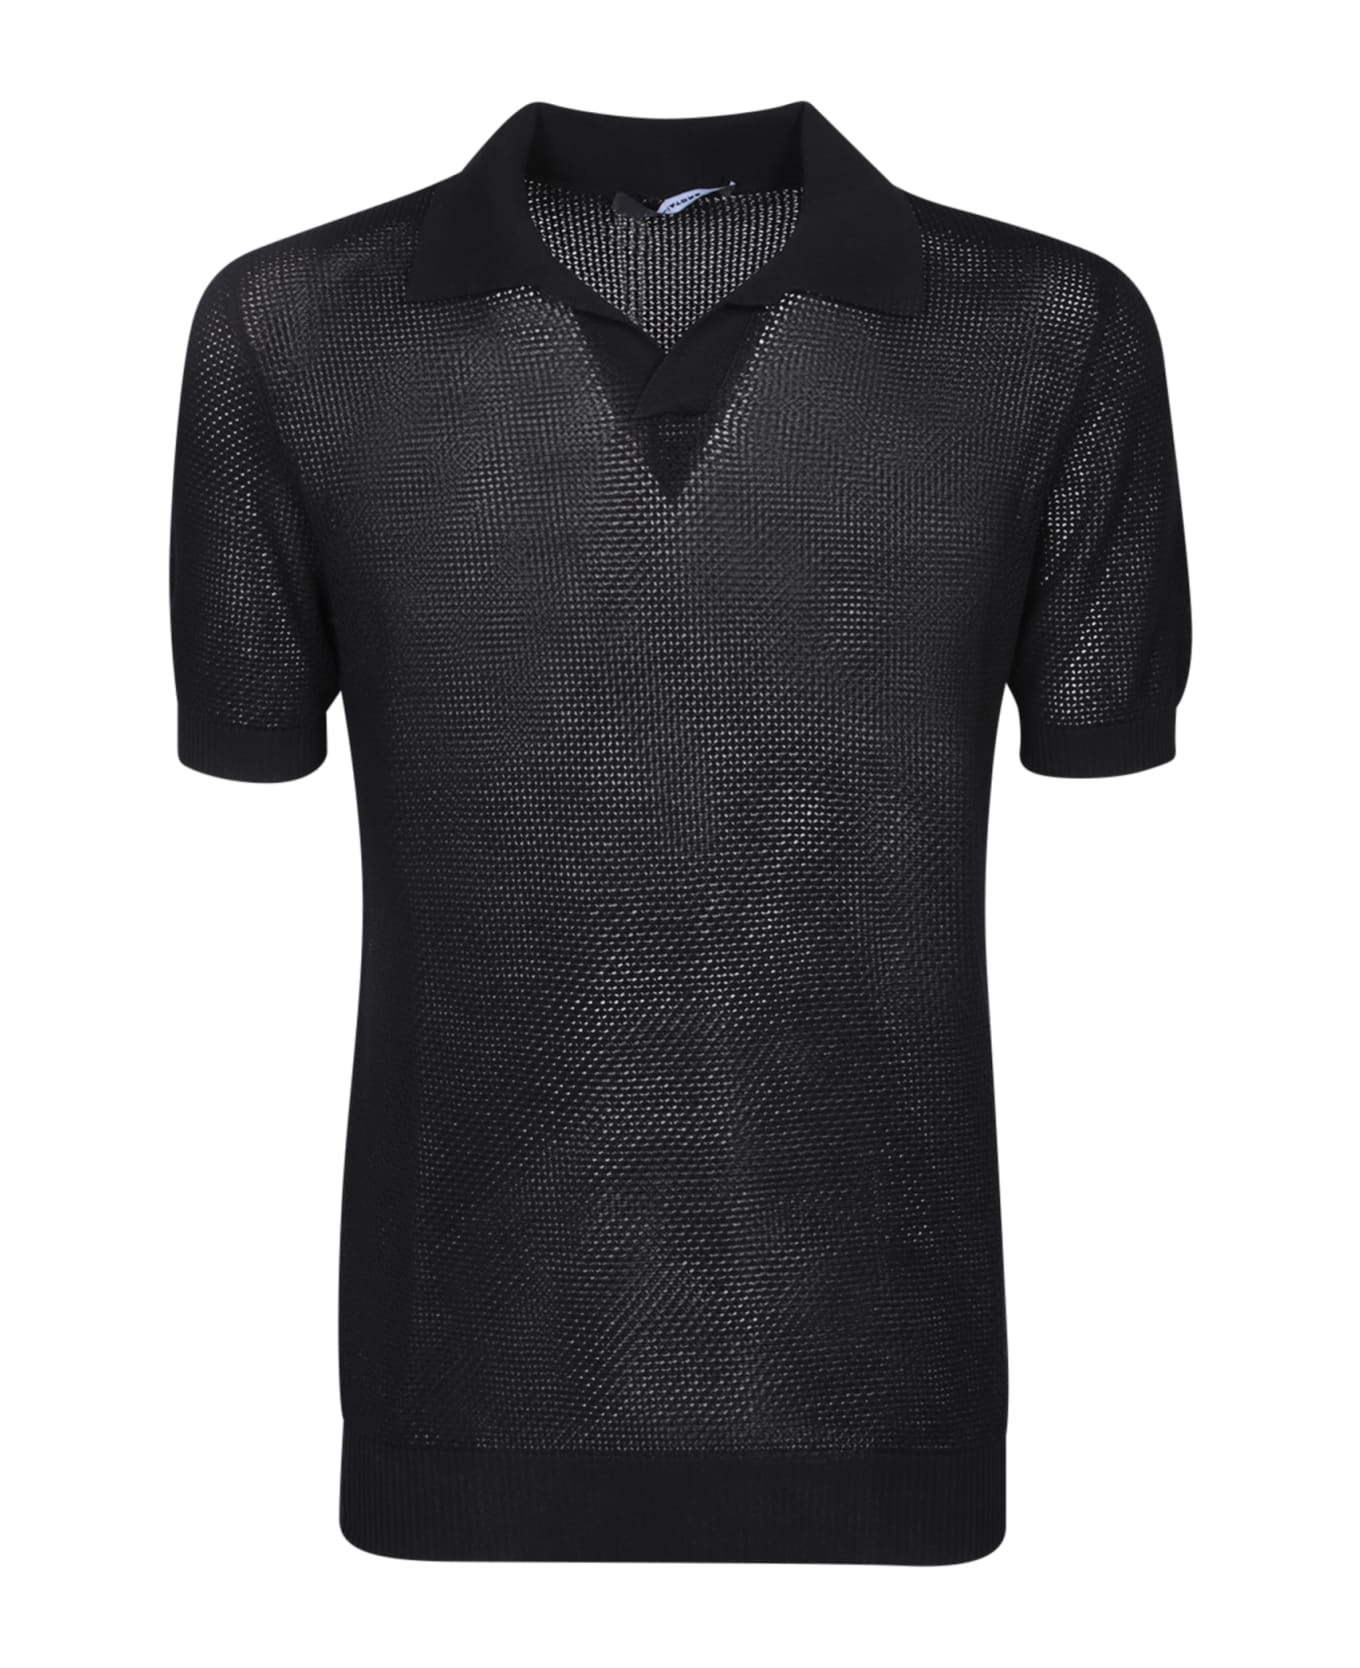 Tagliatore Crochet Black Polo Shirt - Black ポロシャツ